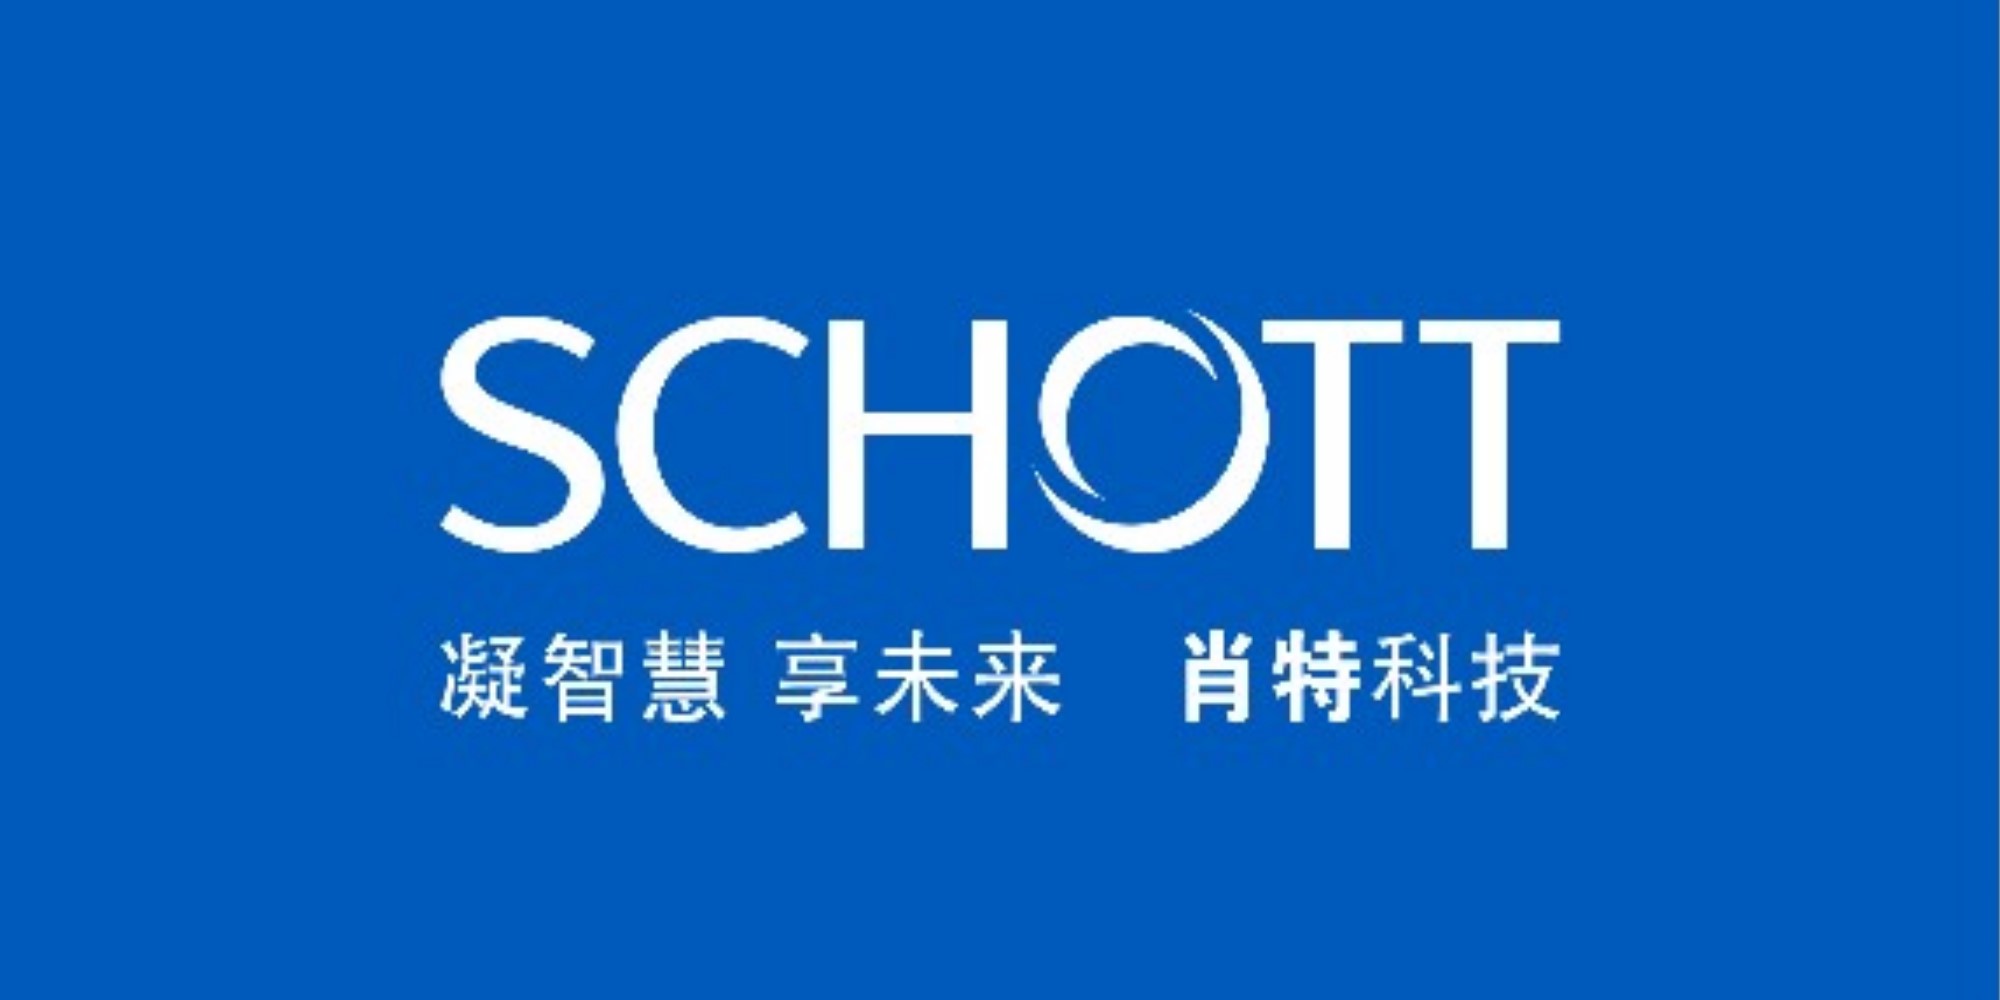 +SCHOTT_Logo-Claim-cn_2000px_Blue-White_Online_sRGB.jpg